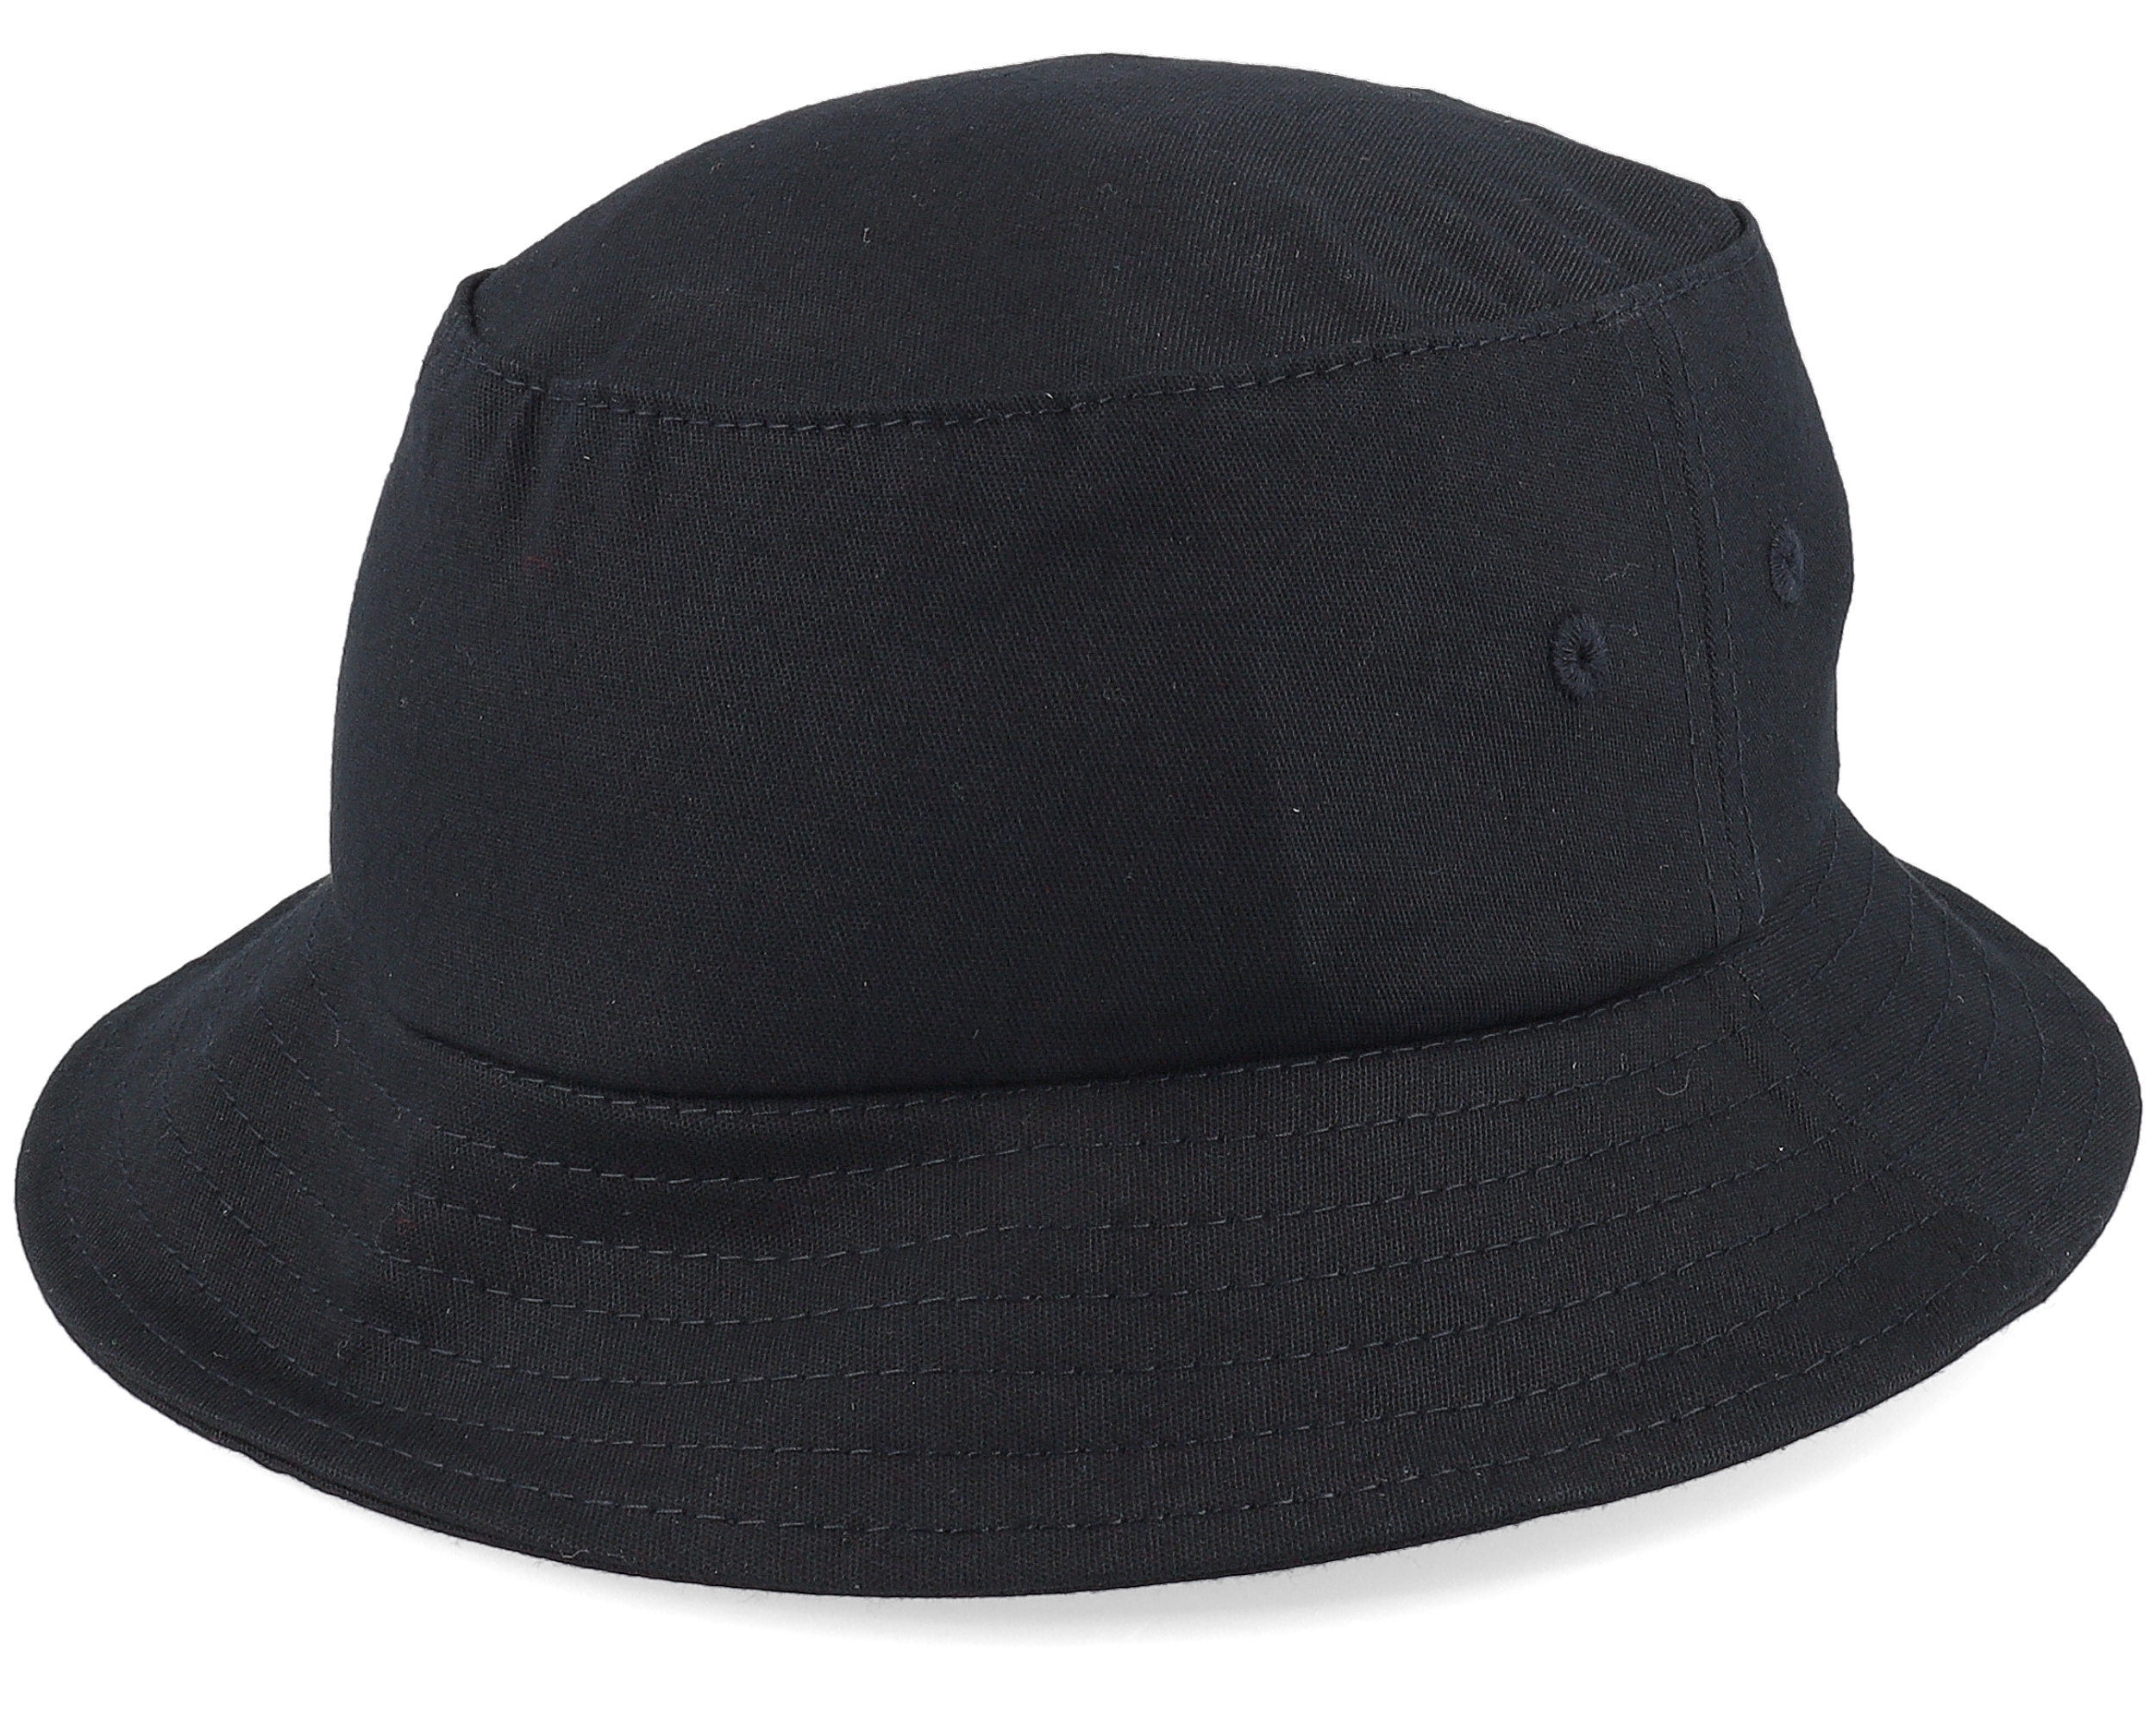 Kids Black Bucket - Flexfit hat